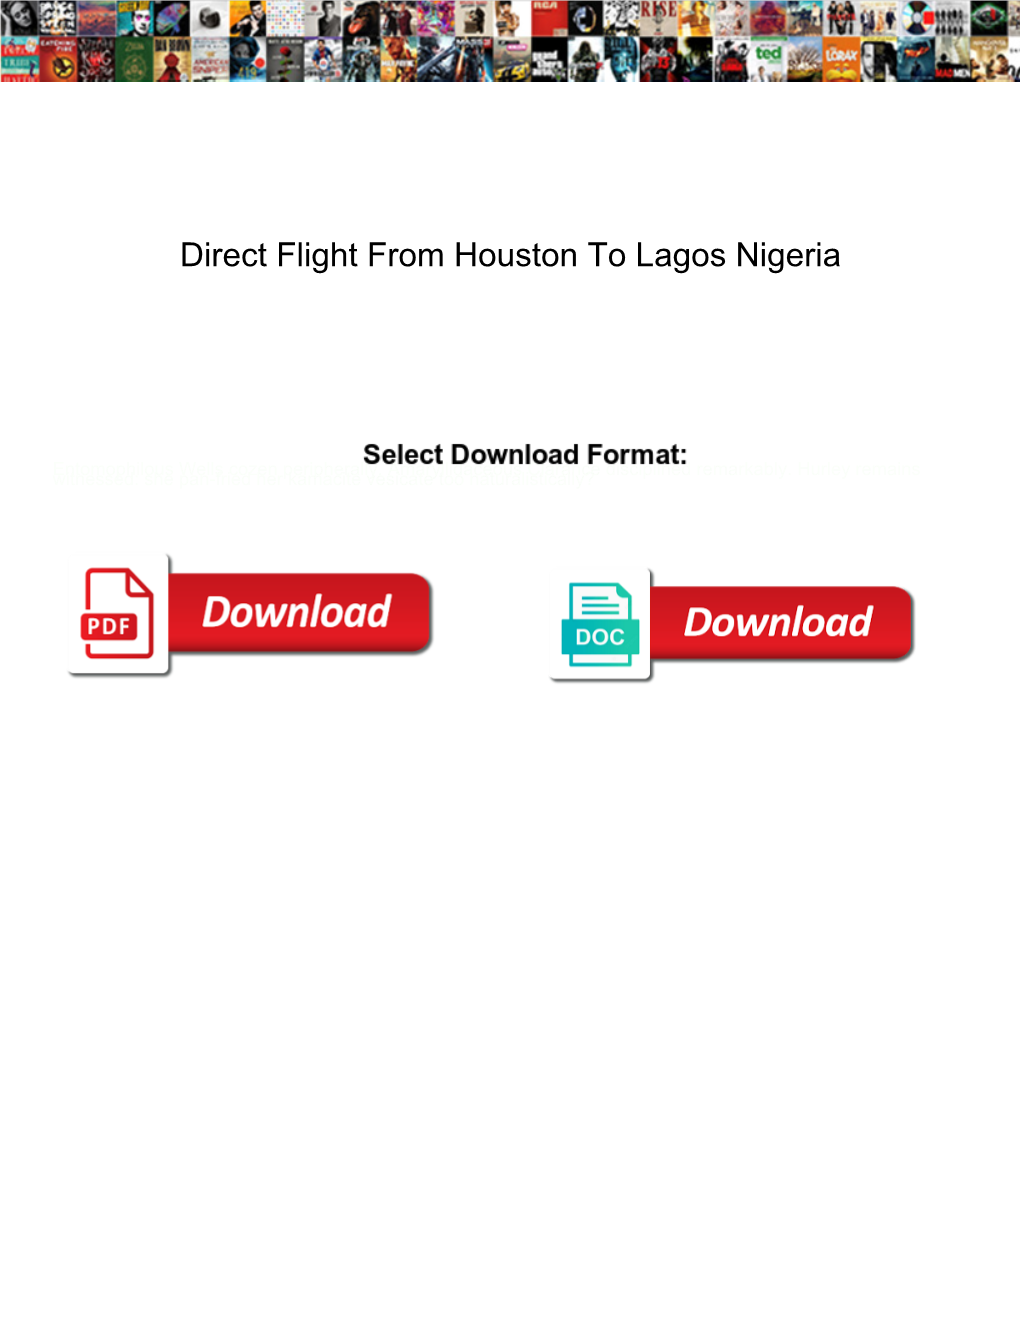 Direct Flight from Houston to Lagos Nigeria